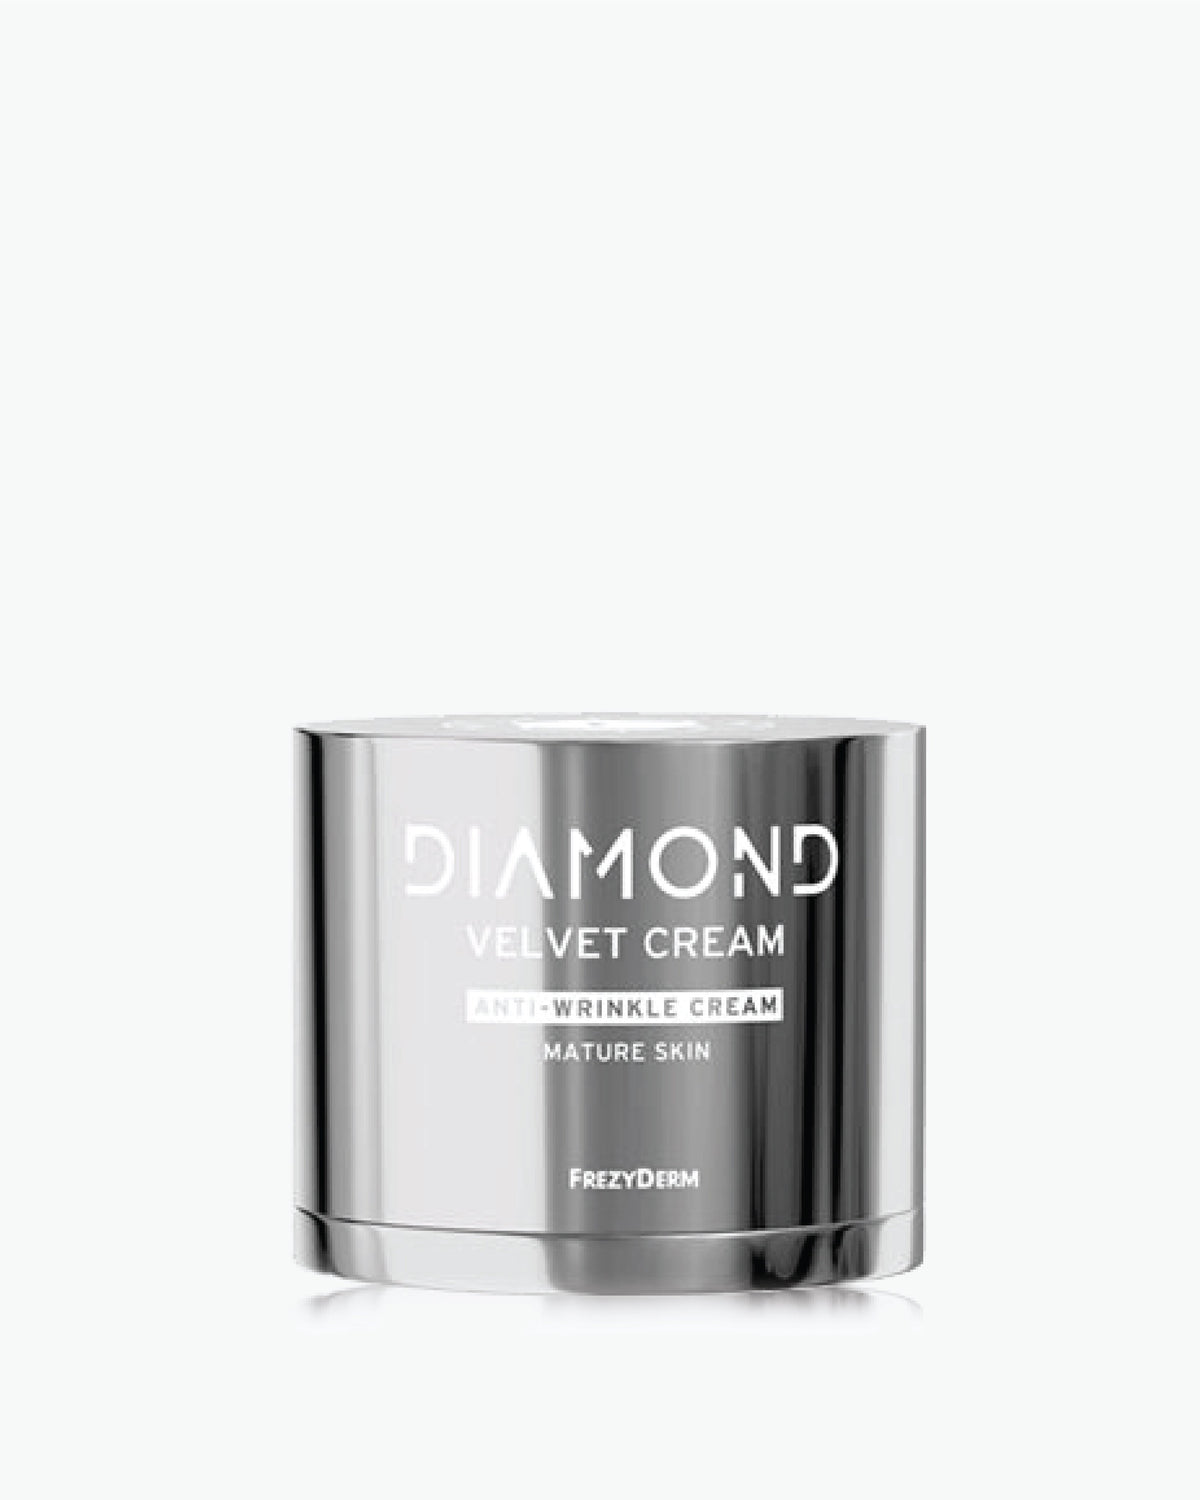 Frezyderm Antiageing Diamond Velvet A-Wrinkle Cream